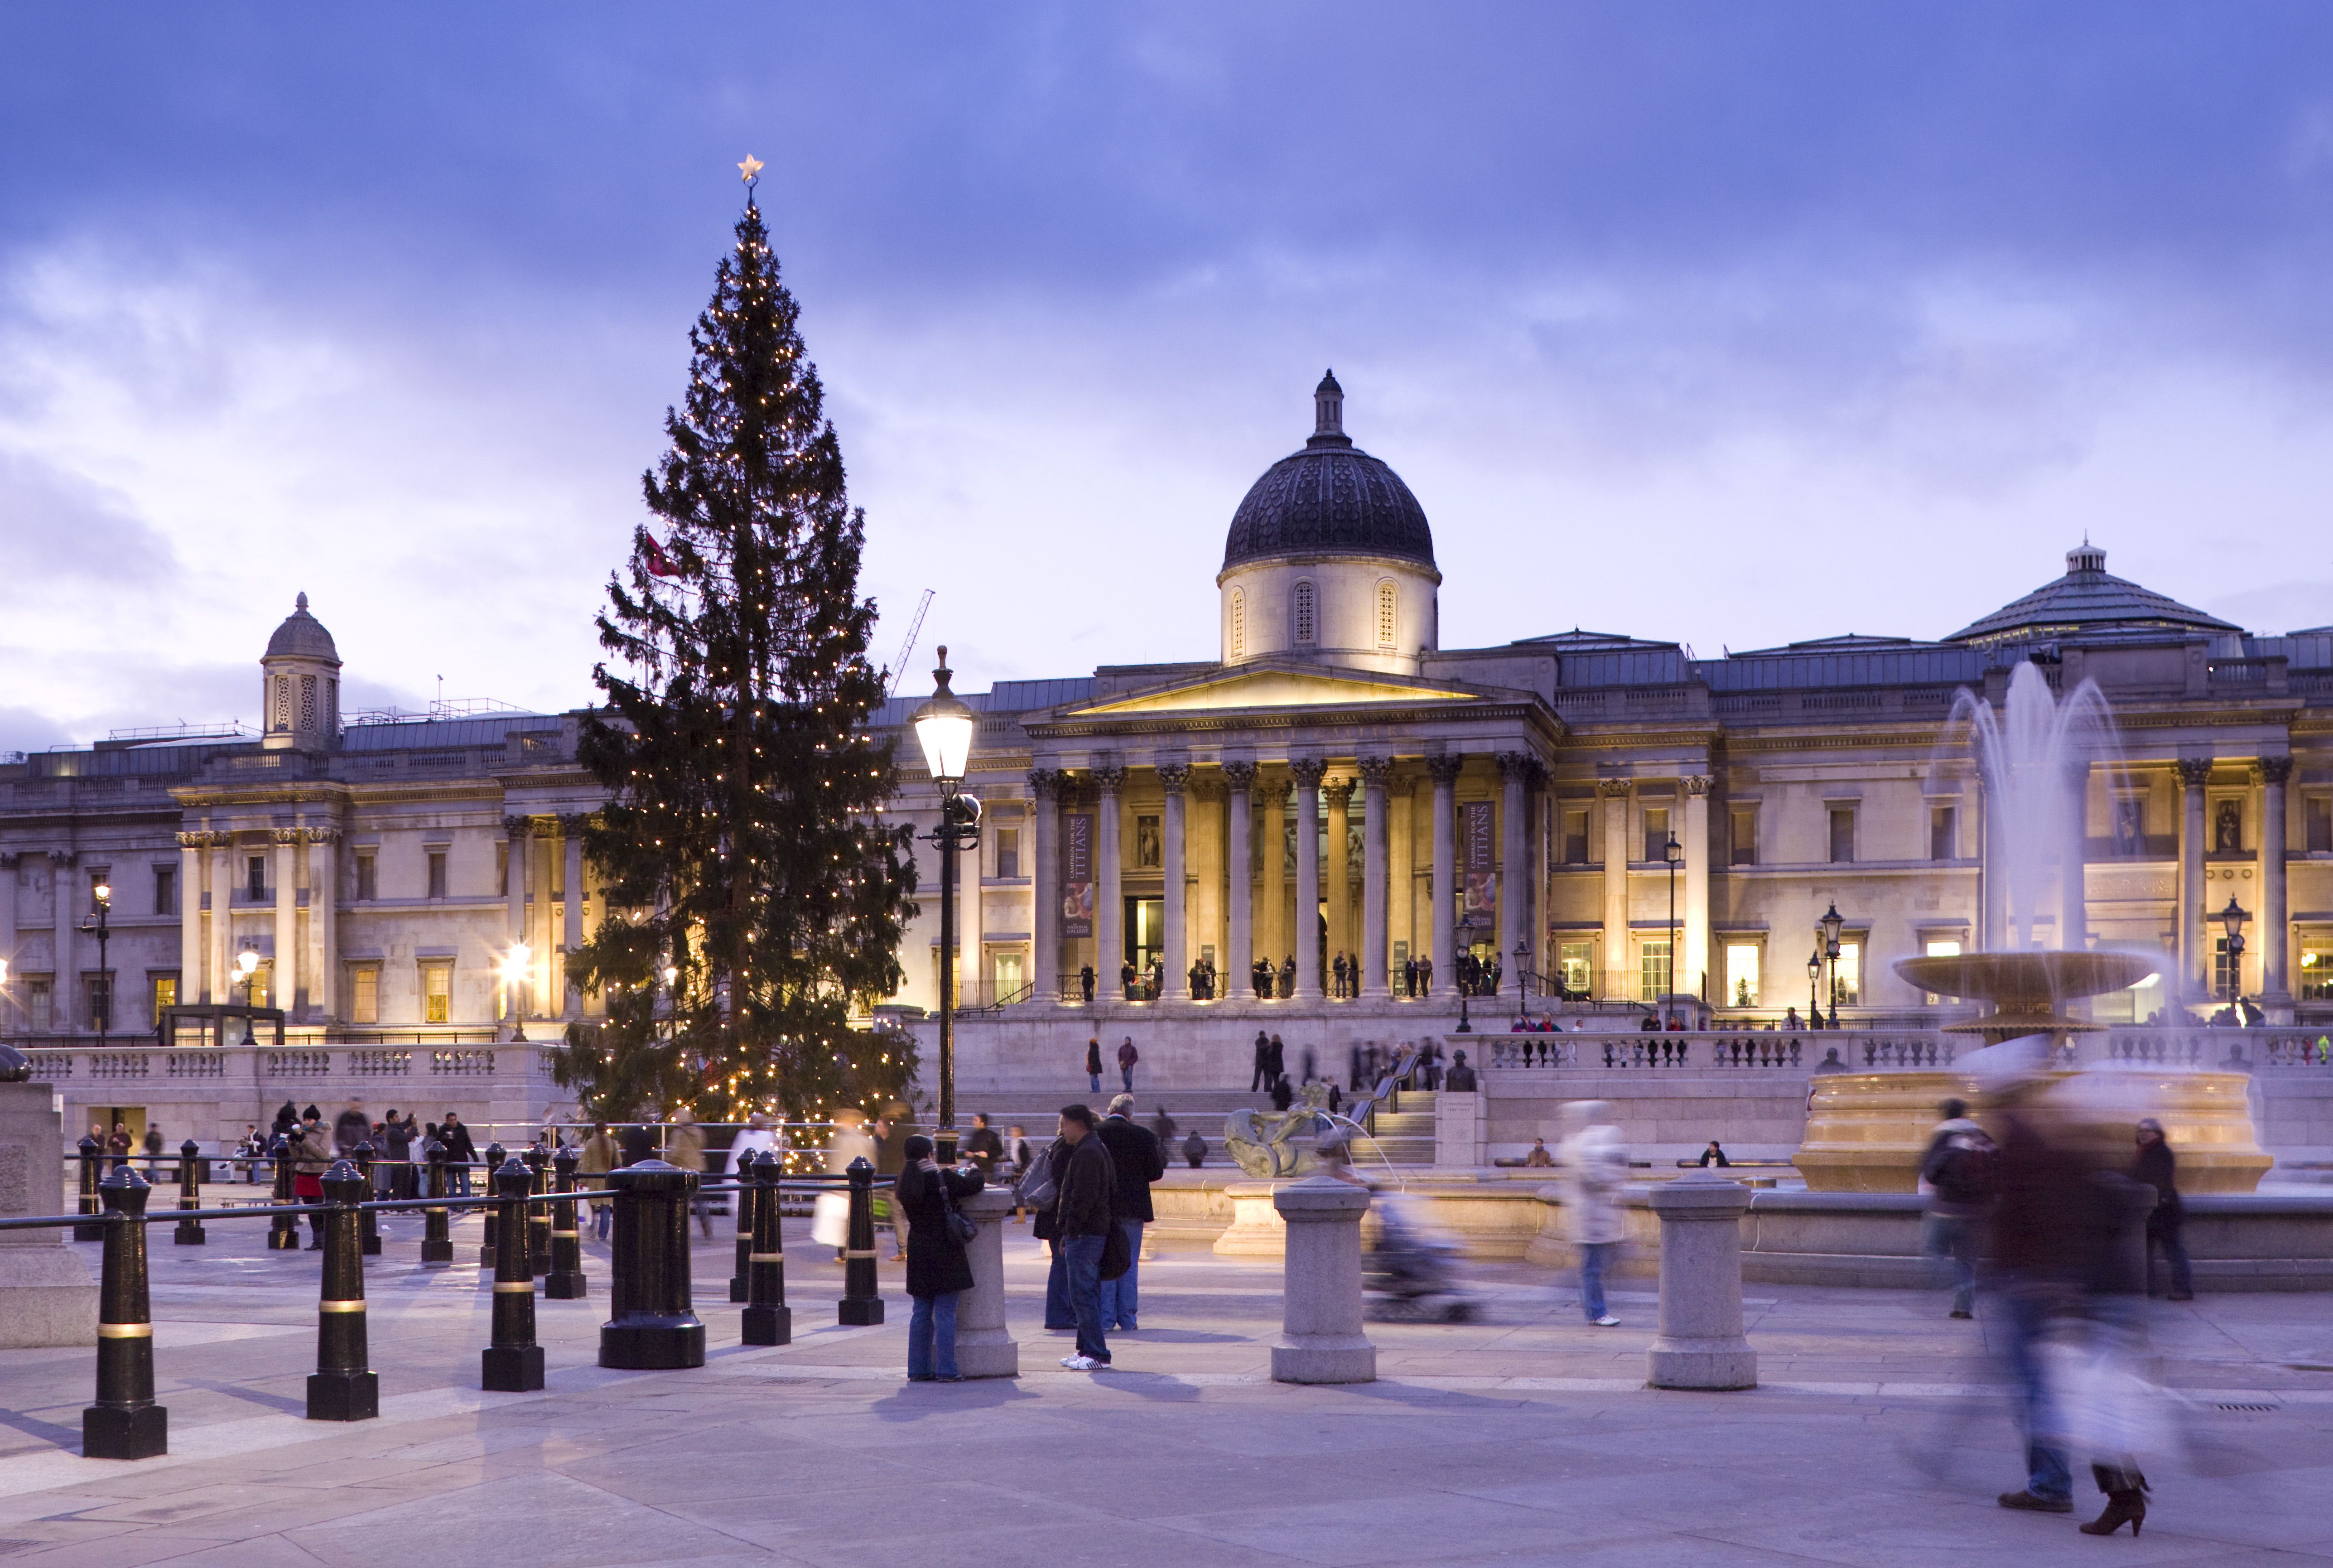 england  london  national portrait gallery and trafalgar square at christmas 143685775 5958288f5f9b58843f0142cc